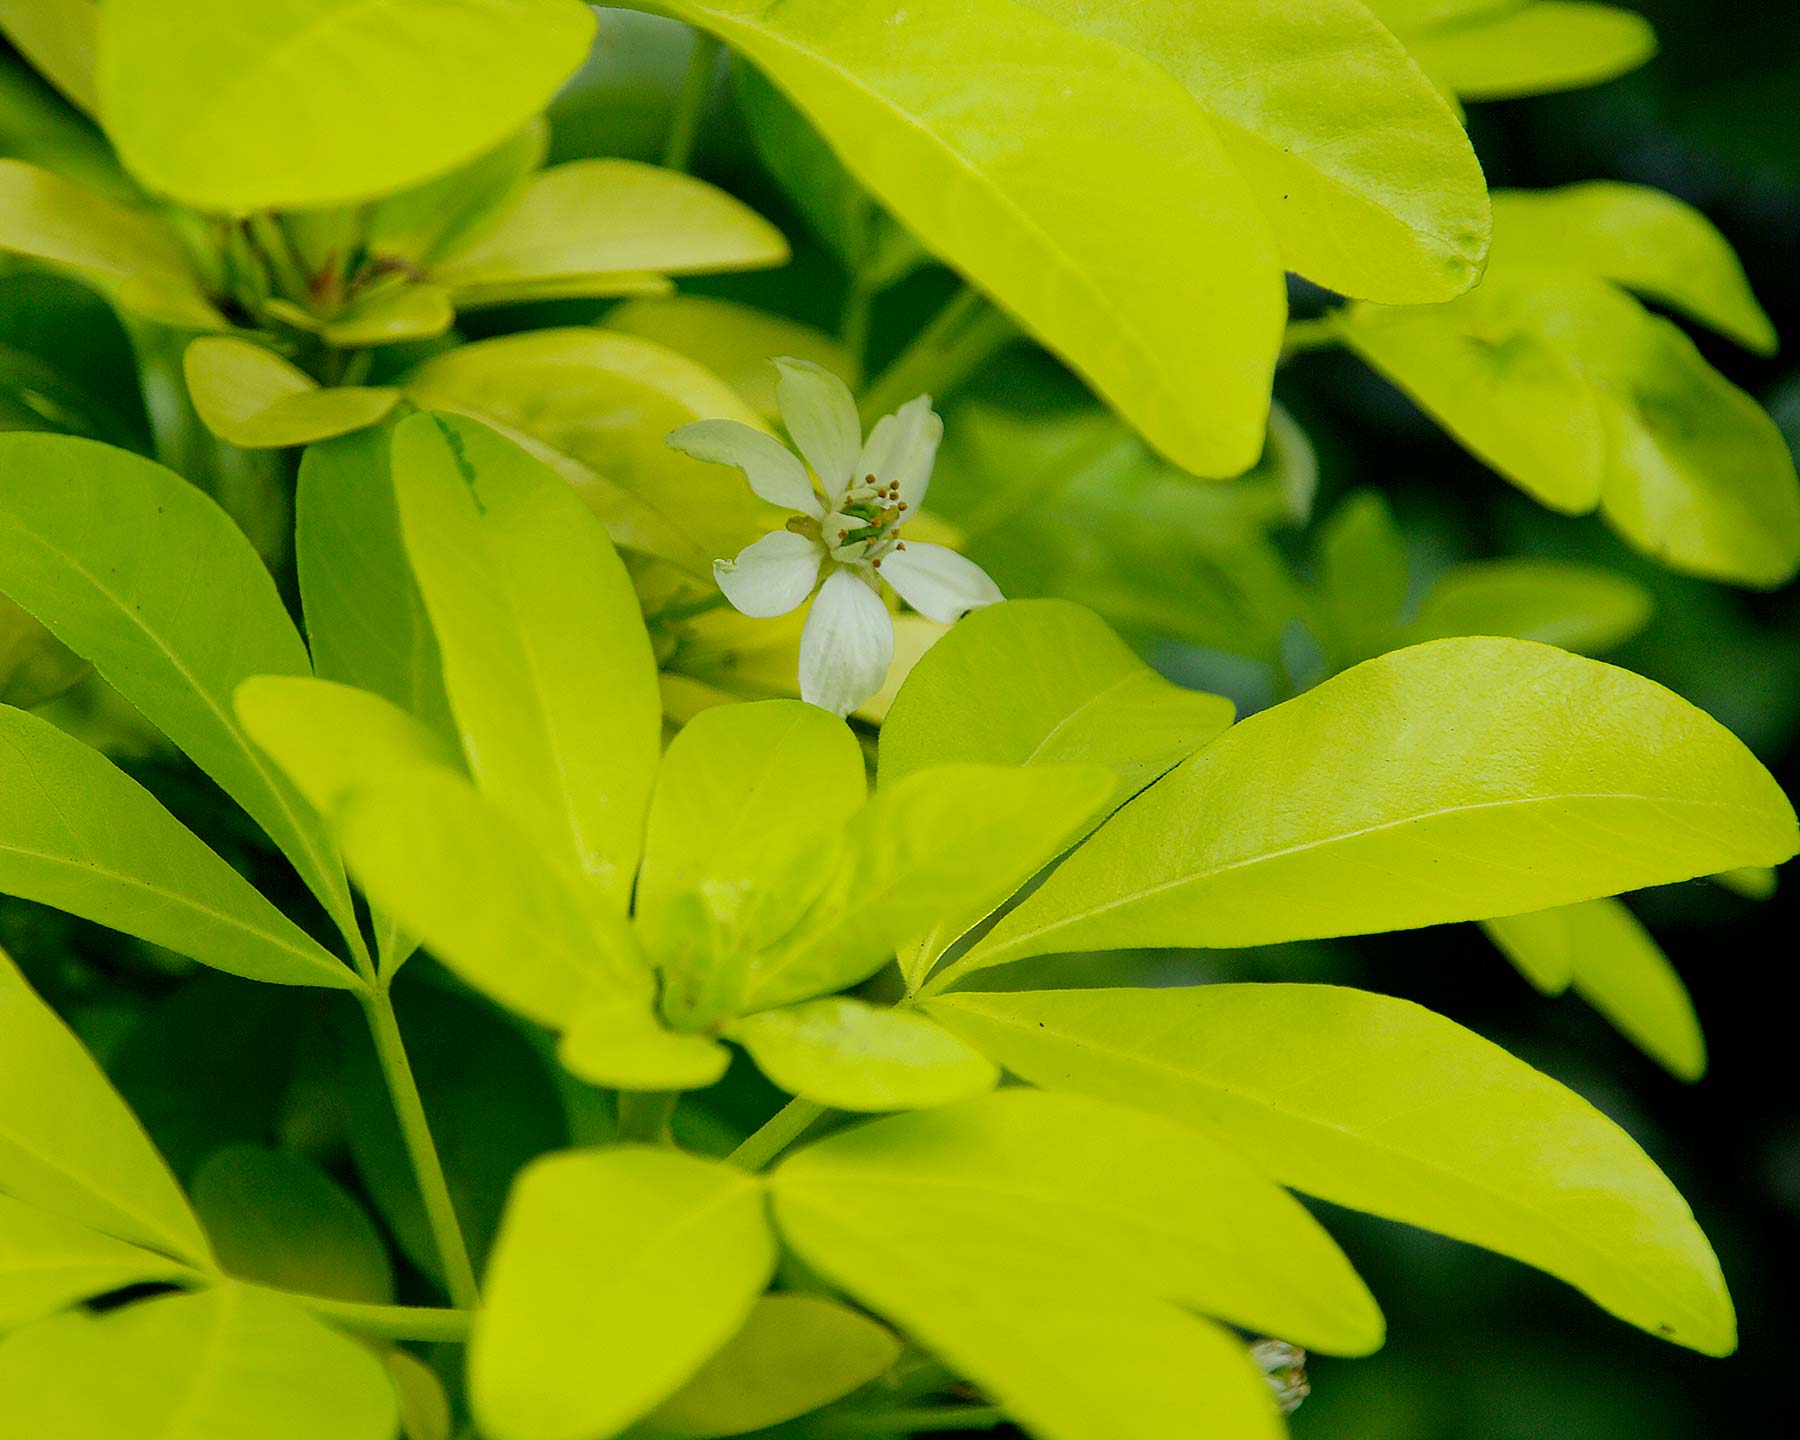 The yellow to yellowy green leaves and small white flowers of Choisya ternata 'Sundance'